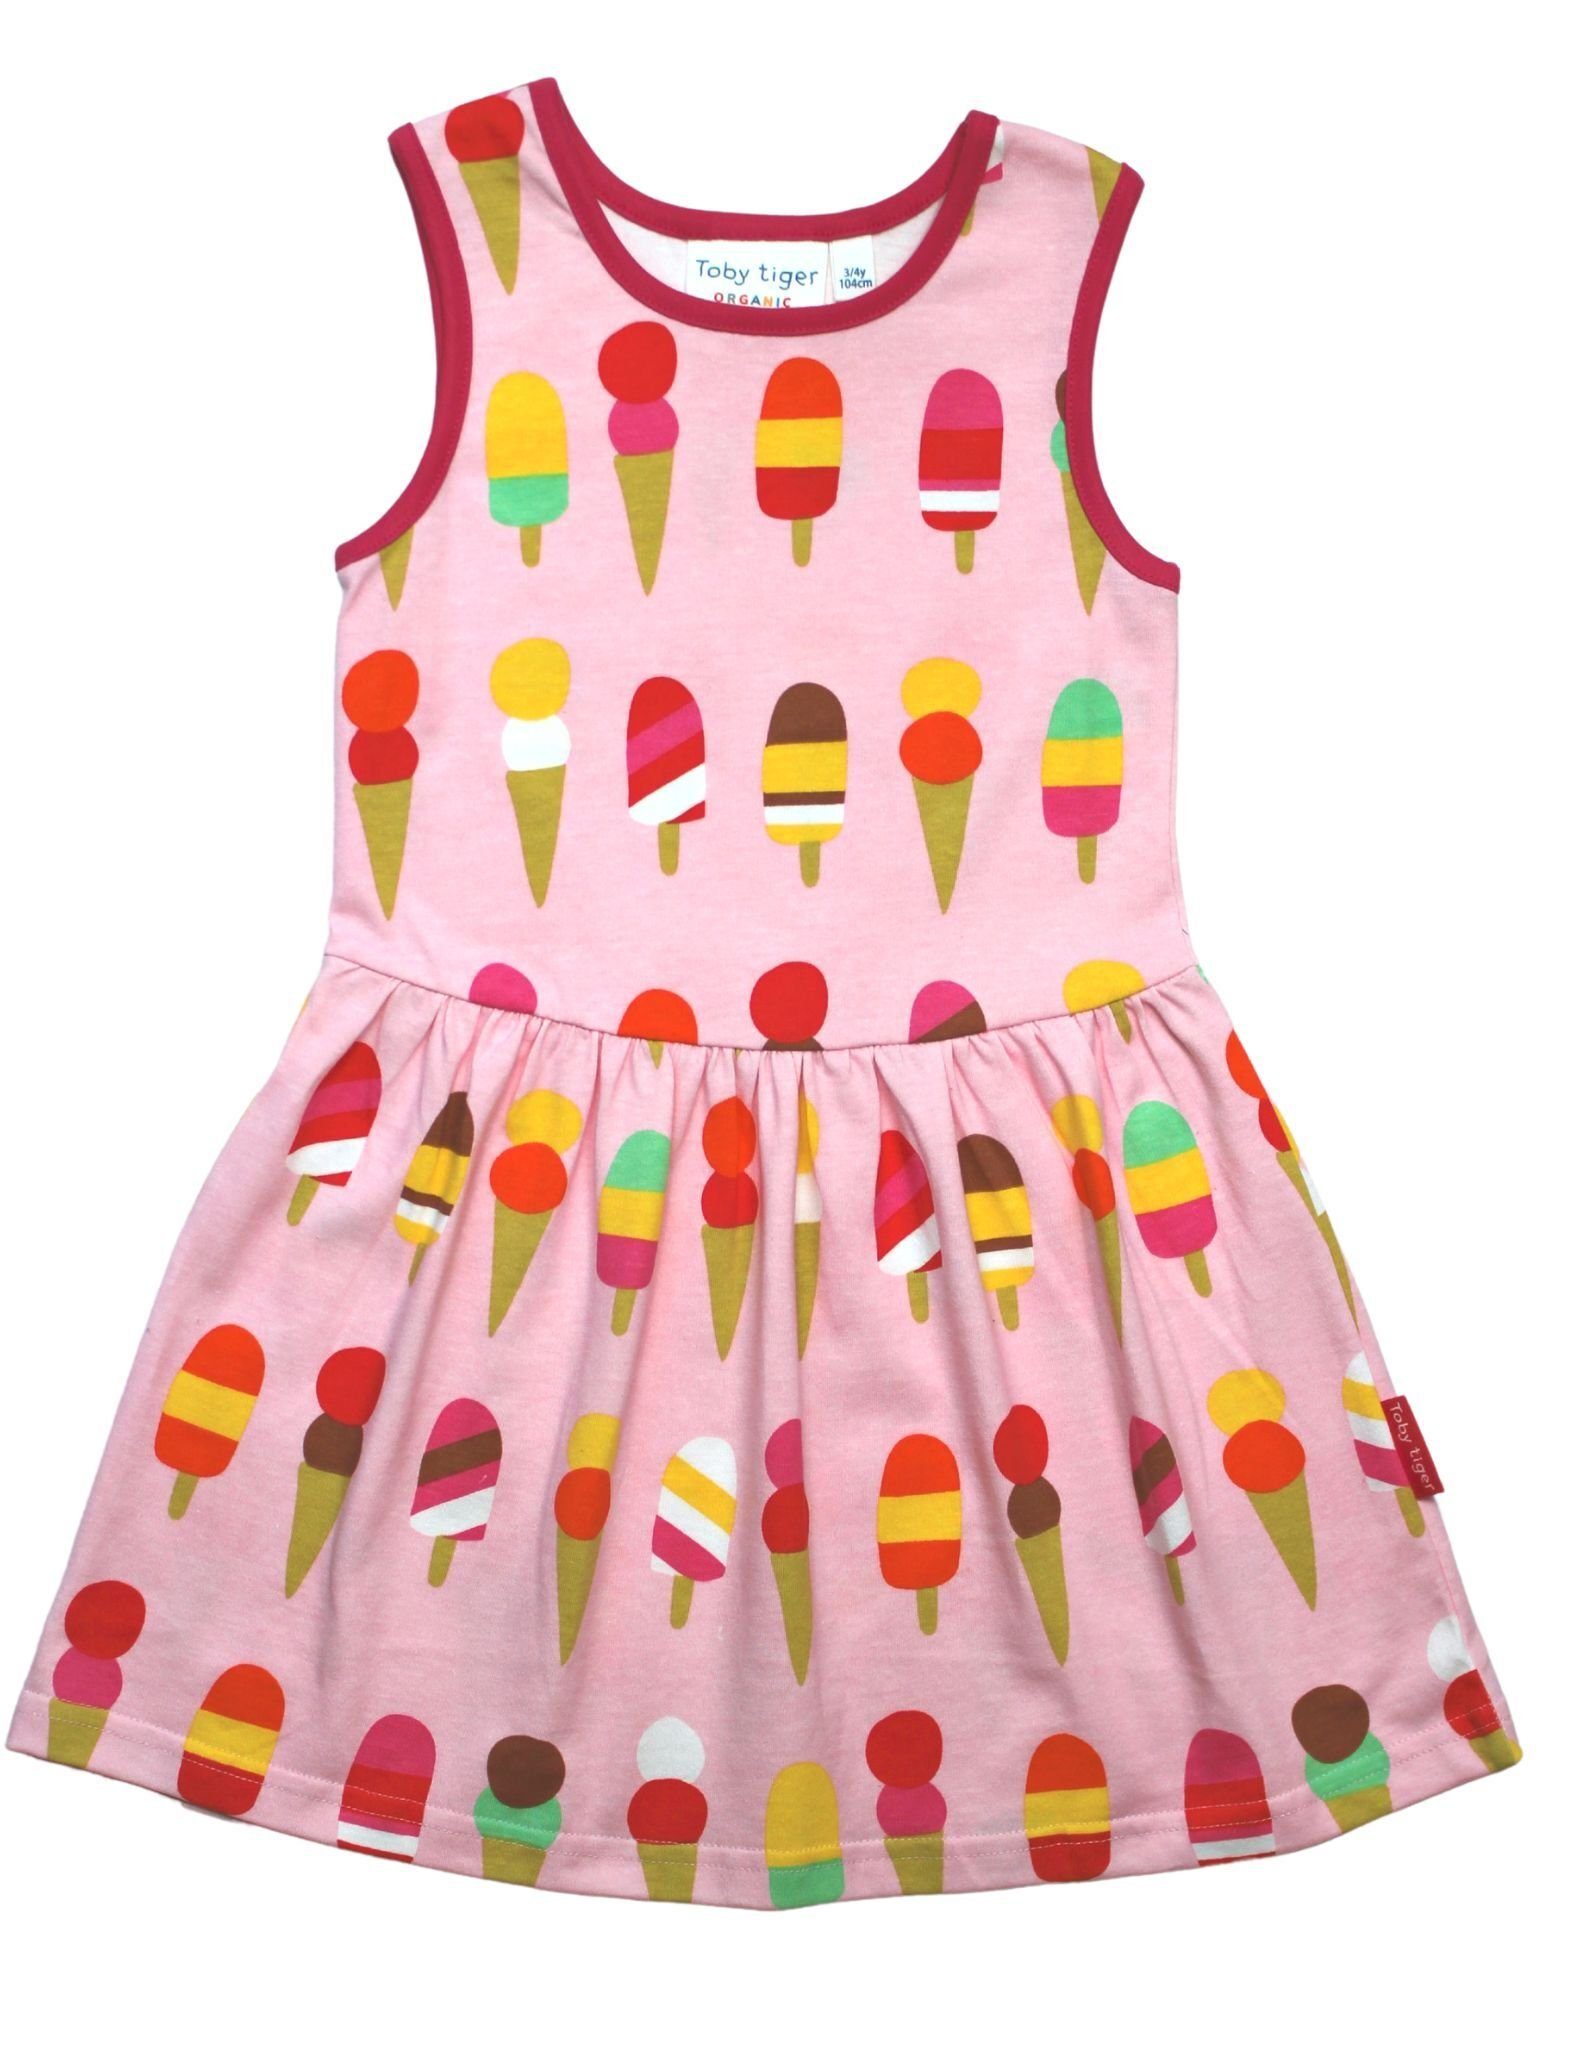 Toby Tiger Shirtkleid Kinder Kleid Print mit Eiscreme